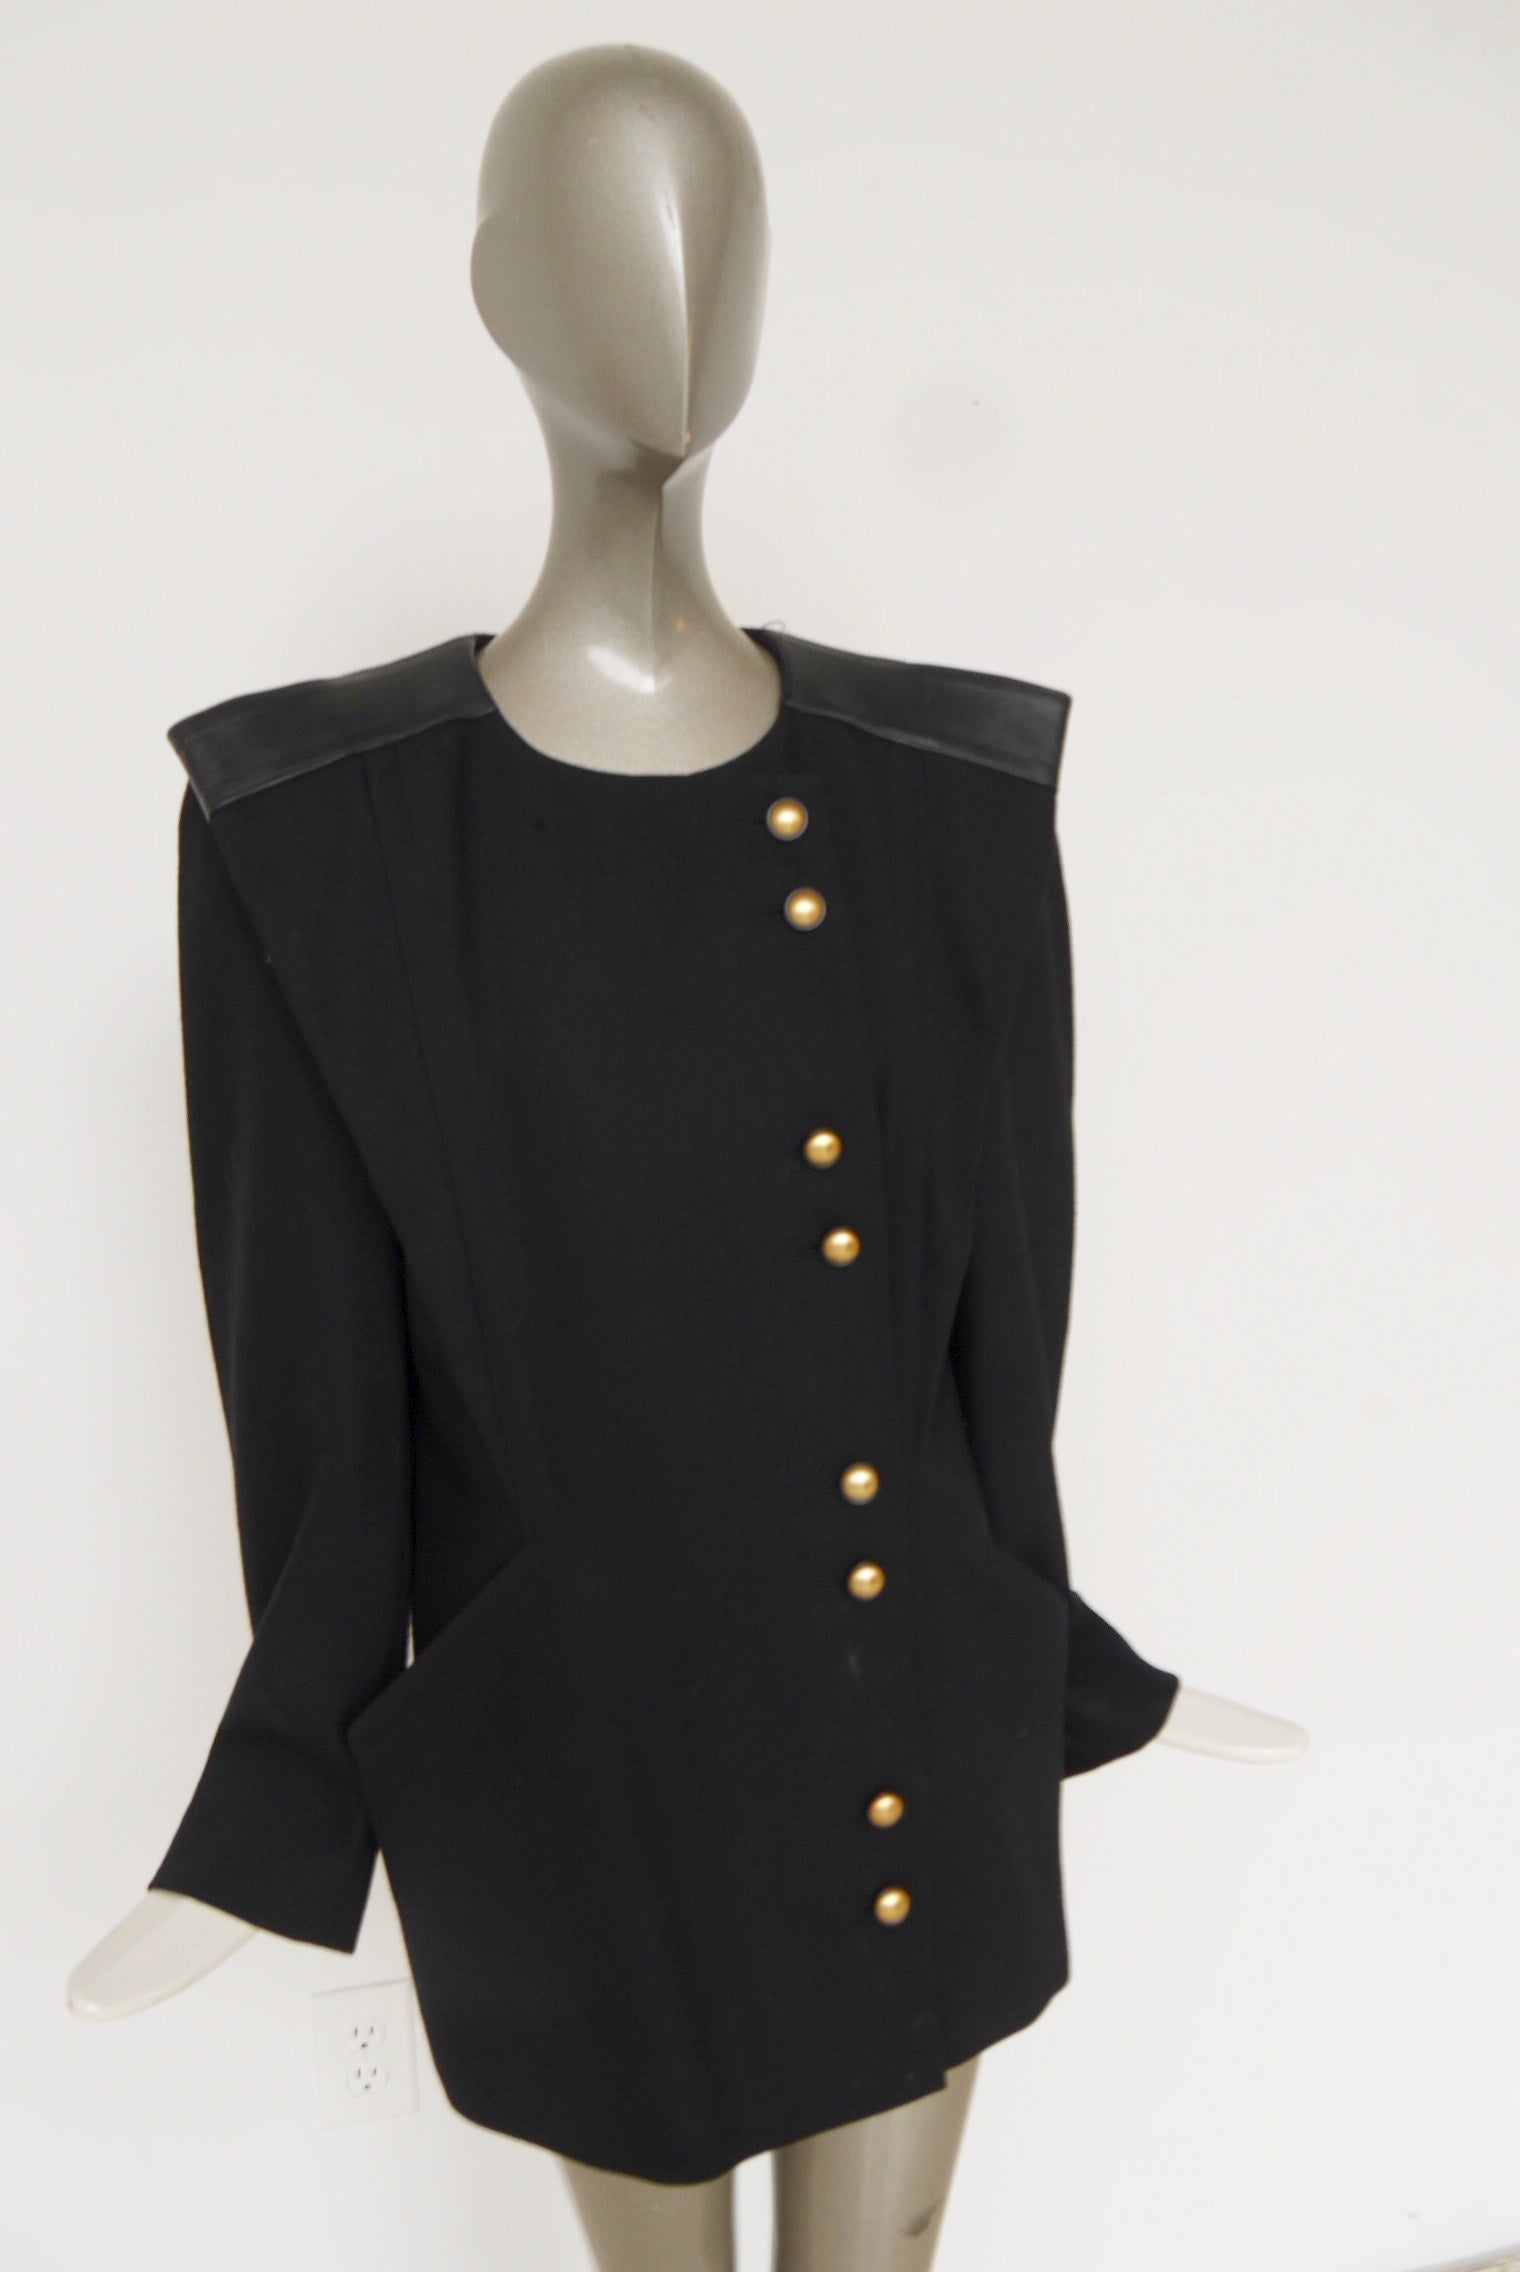 Pierre Cardin avant-garde jacket 1983 – Vintage Le Monde